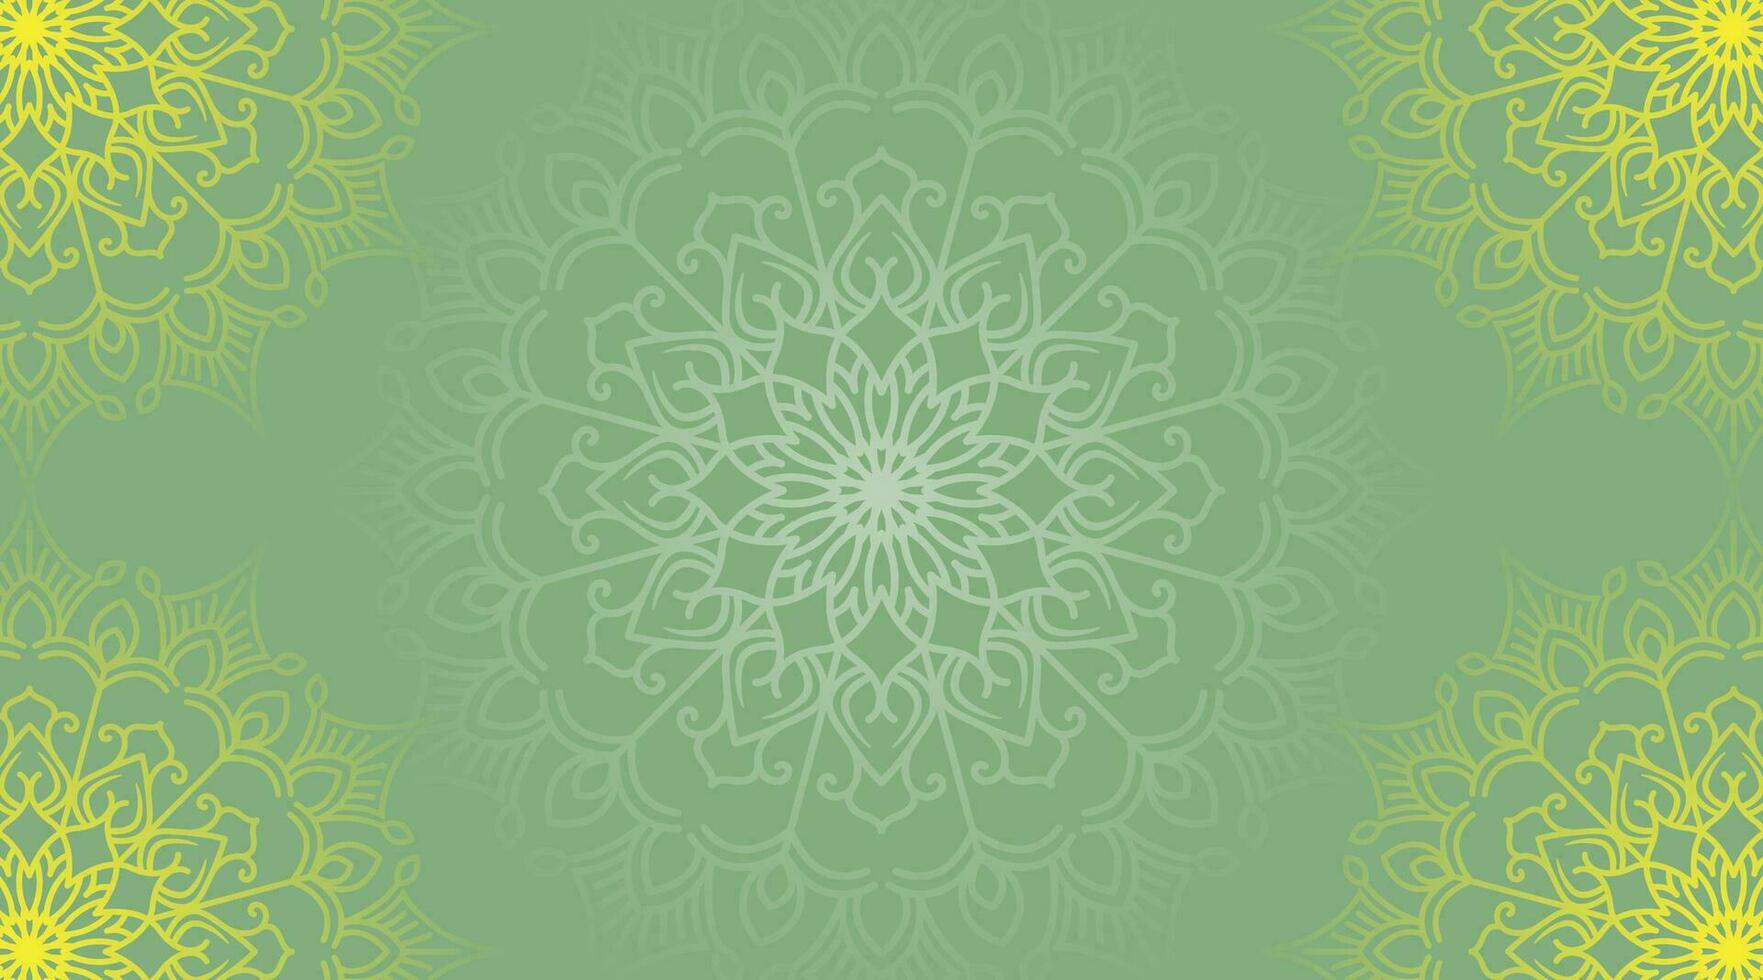 simple background, decorative mandala ornament vector